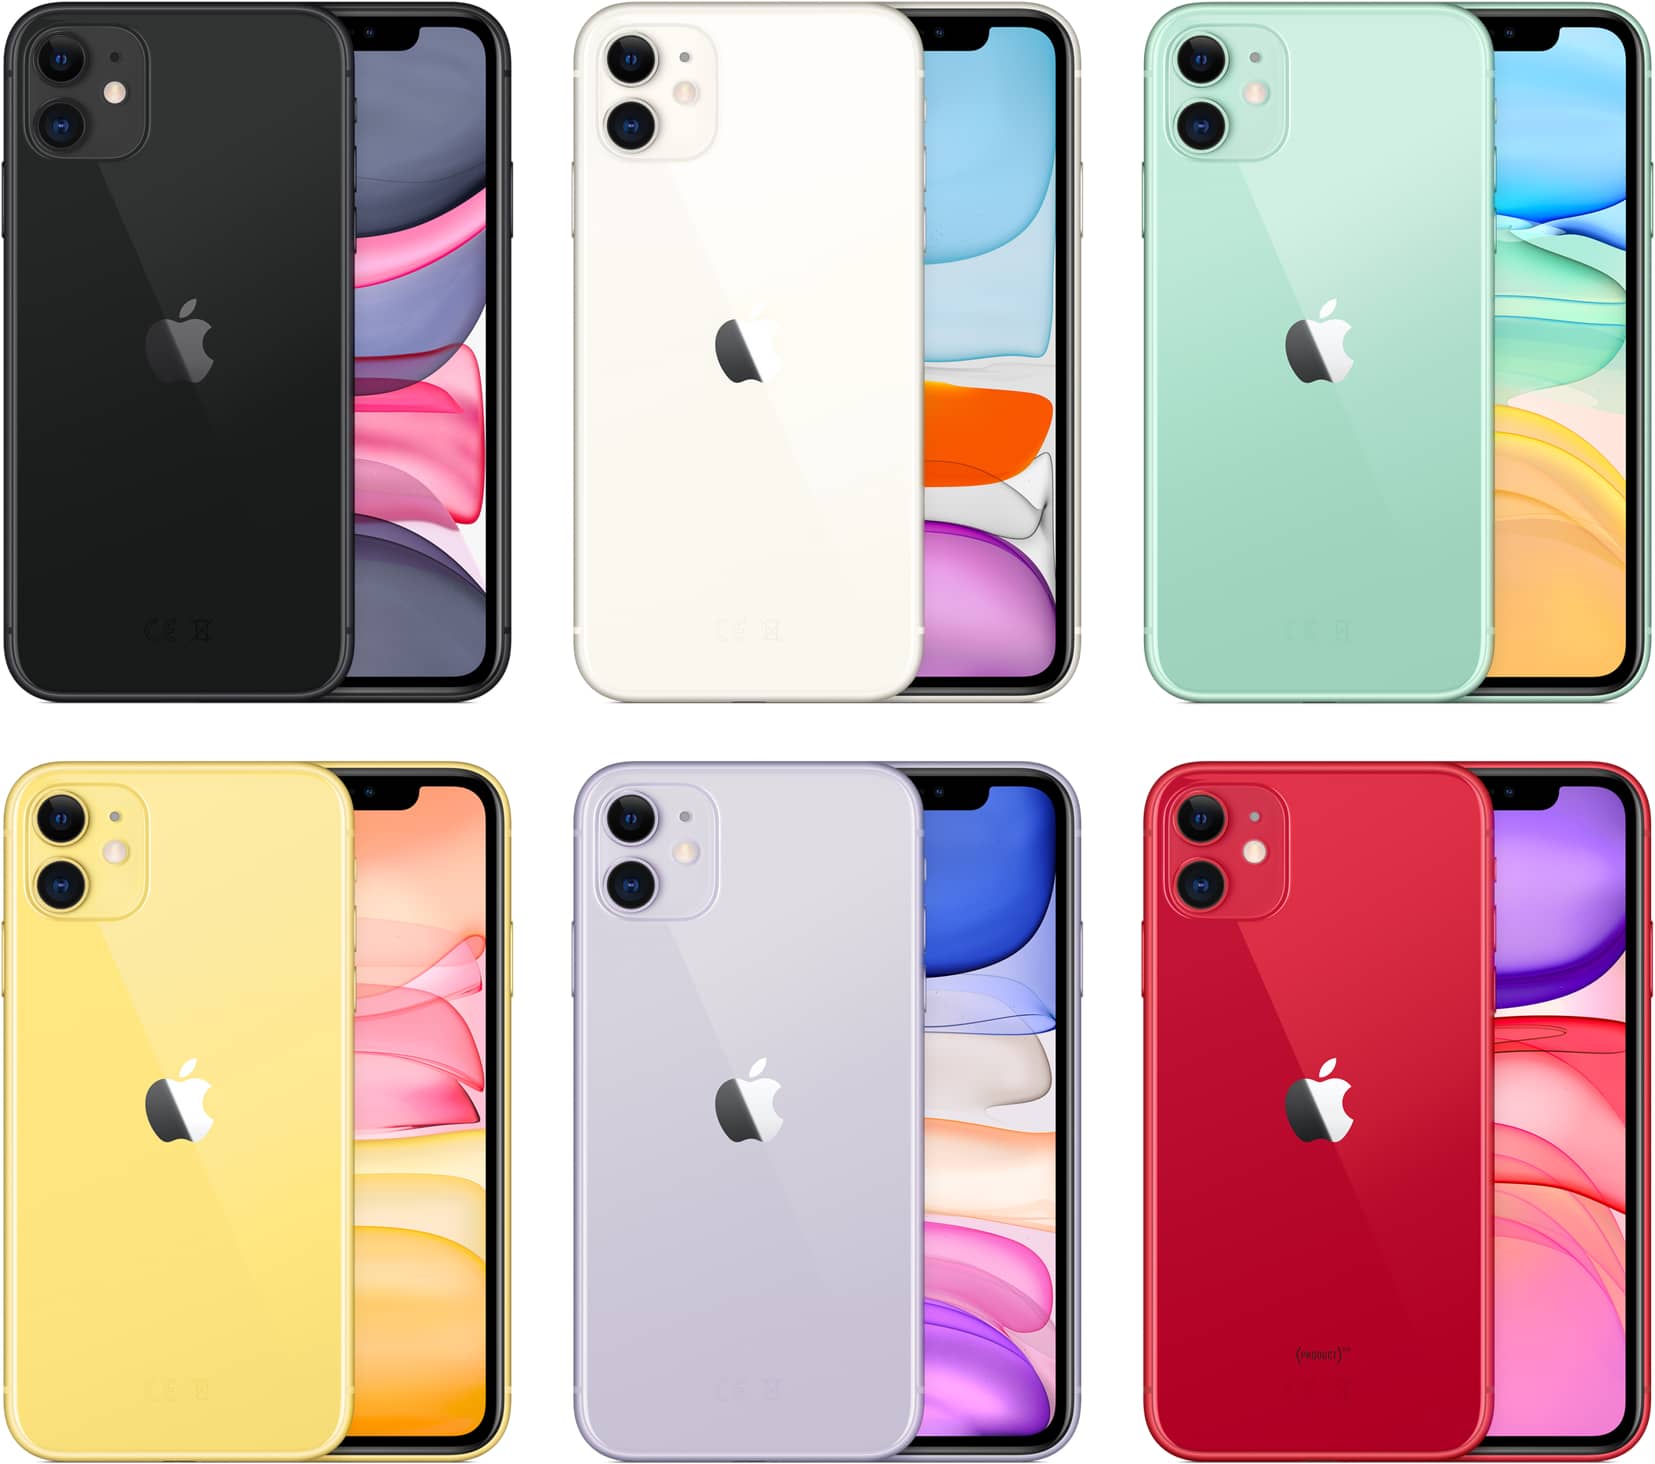 Apple iPhone 11 colours